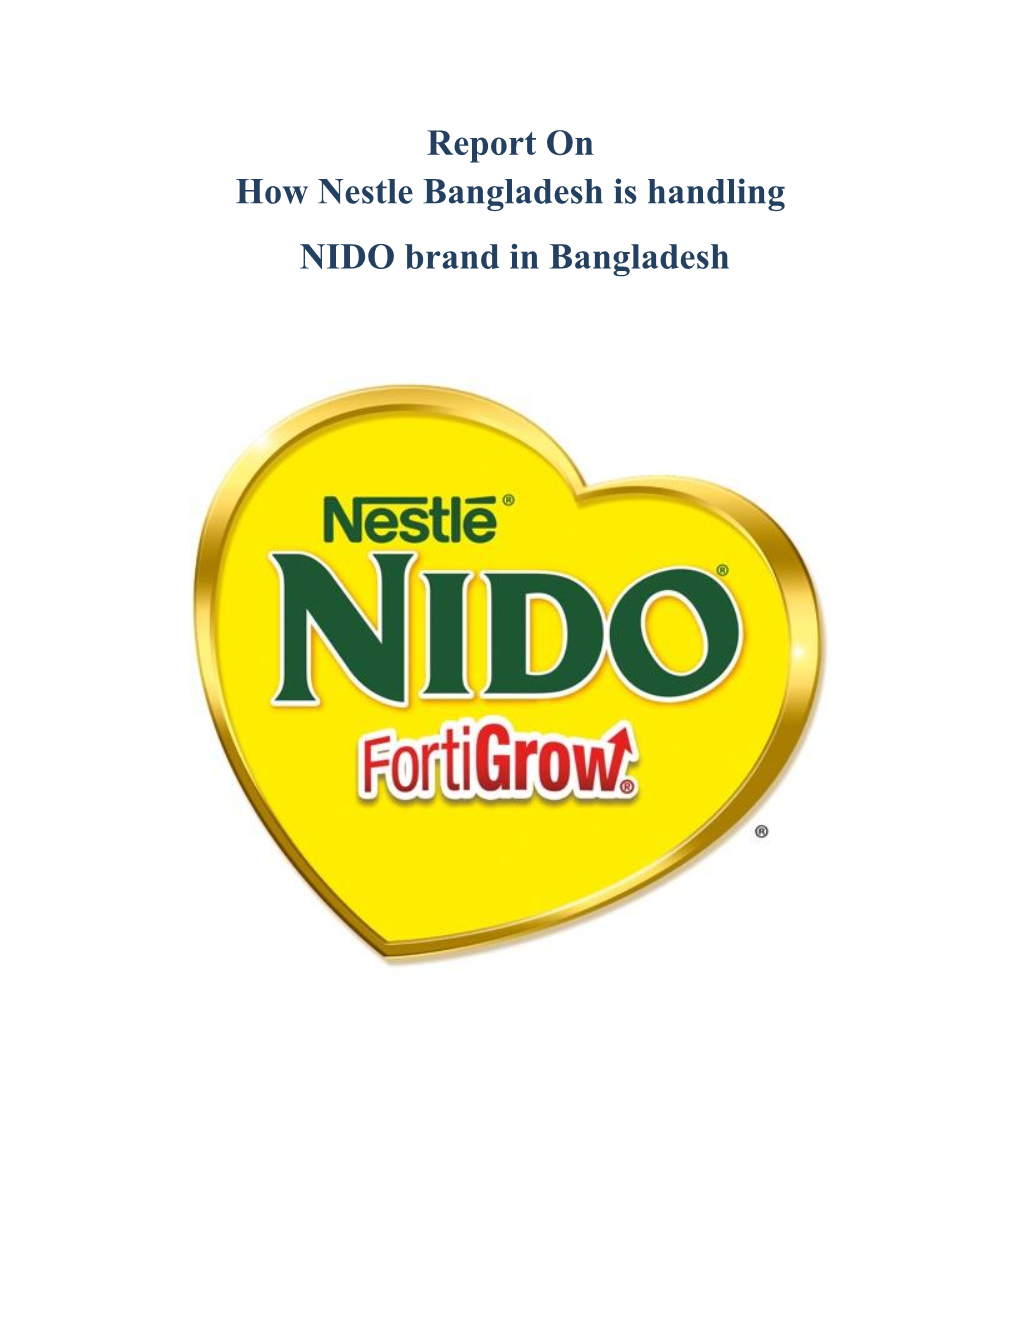 Report on How Nestle Bangladesh Is Handling NIDO Brand in Bangladesh